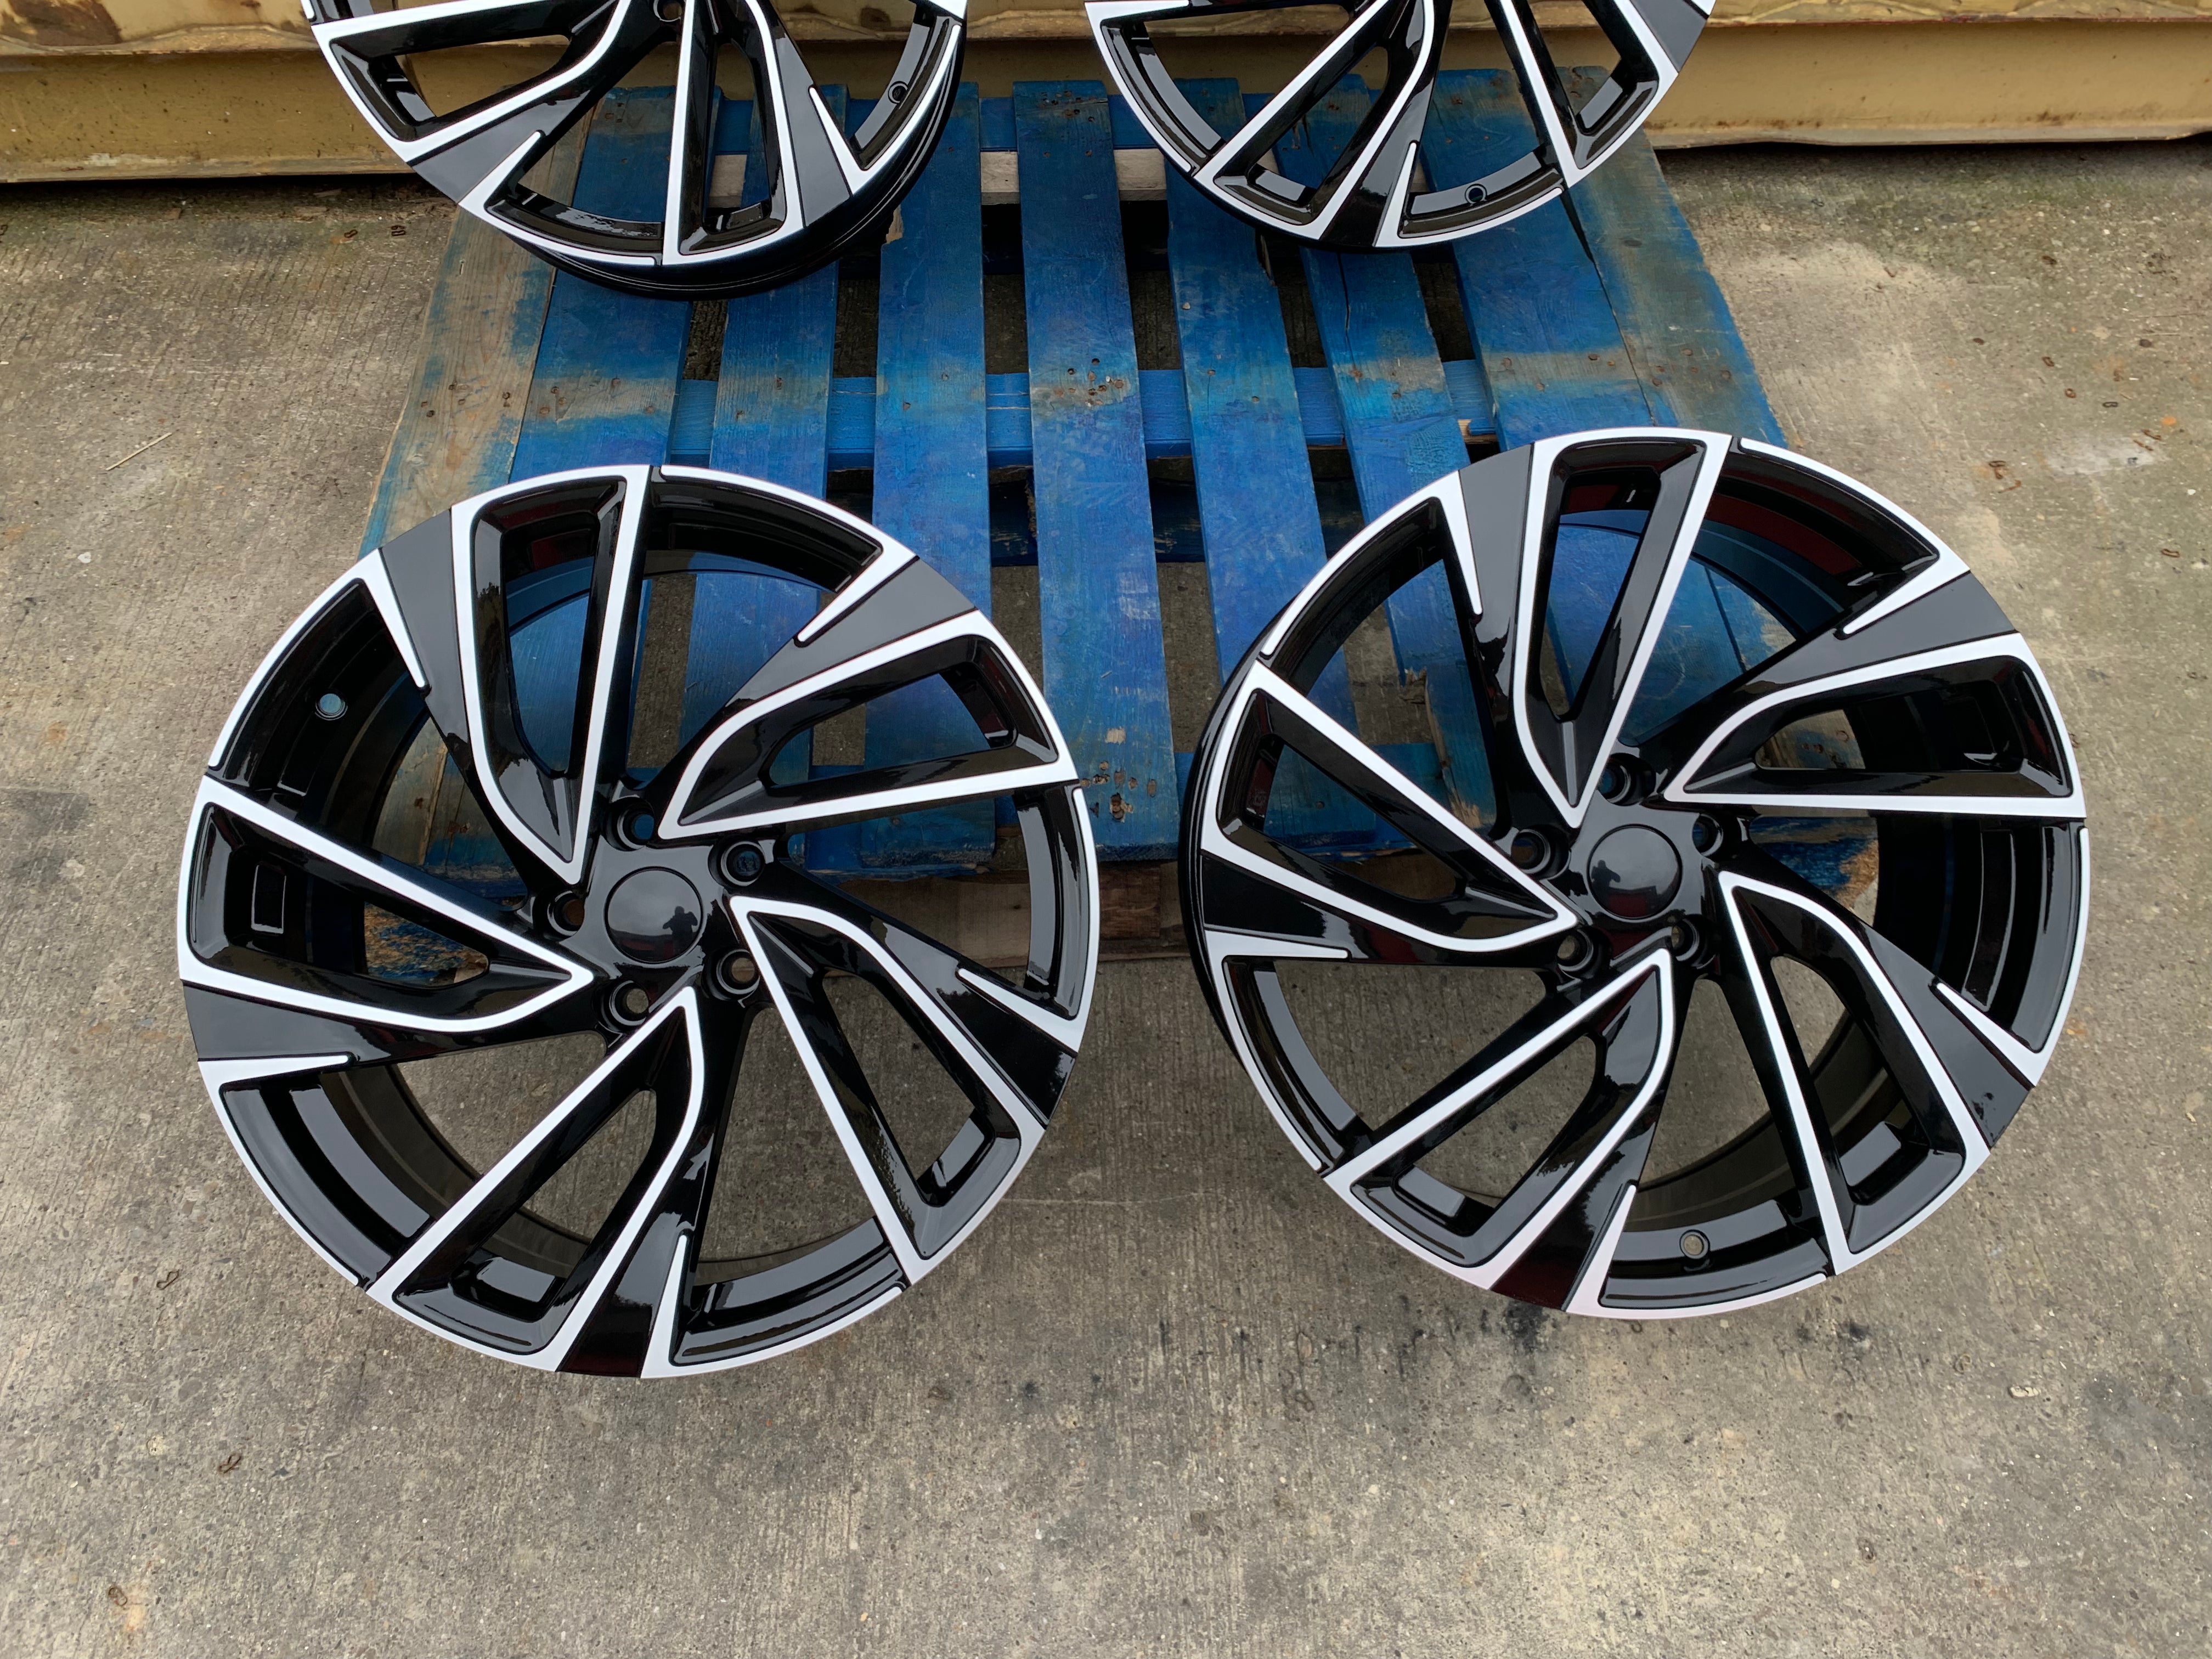 18" Golf MK8 Adelaide style Twist Gti style wheels Black Polished 5x112 fits Volkswagen